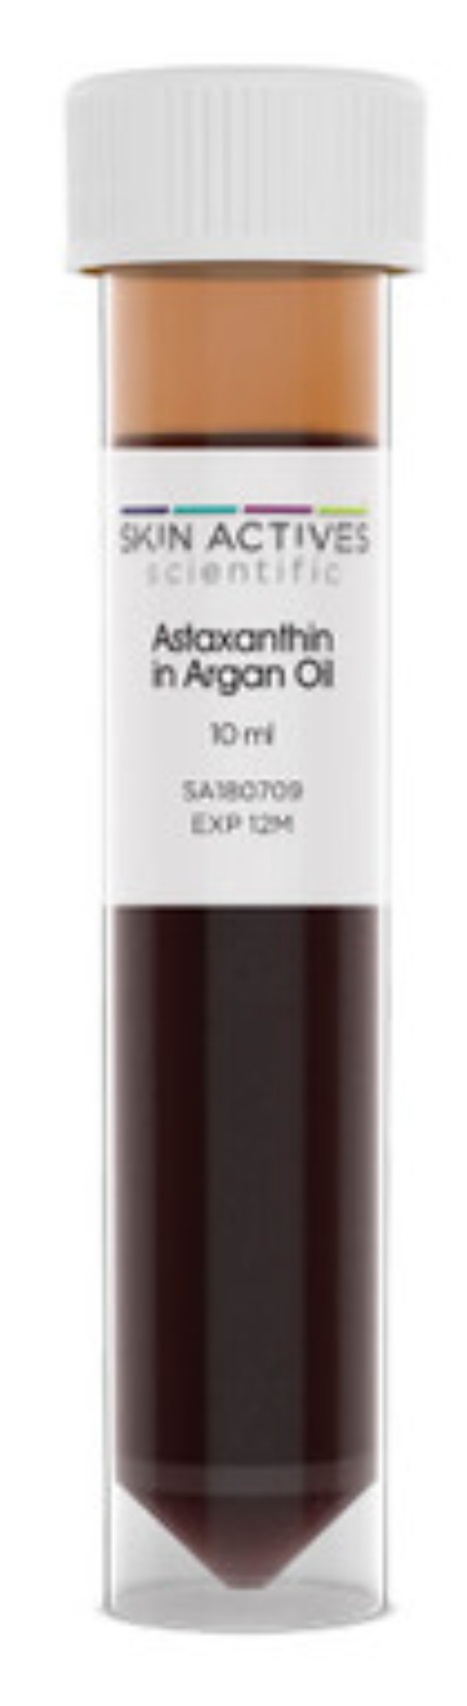 Skin Actives Scientific Astaxathan In Argan Oil